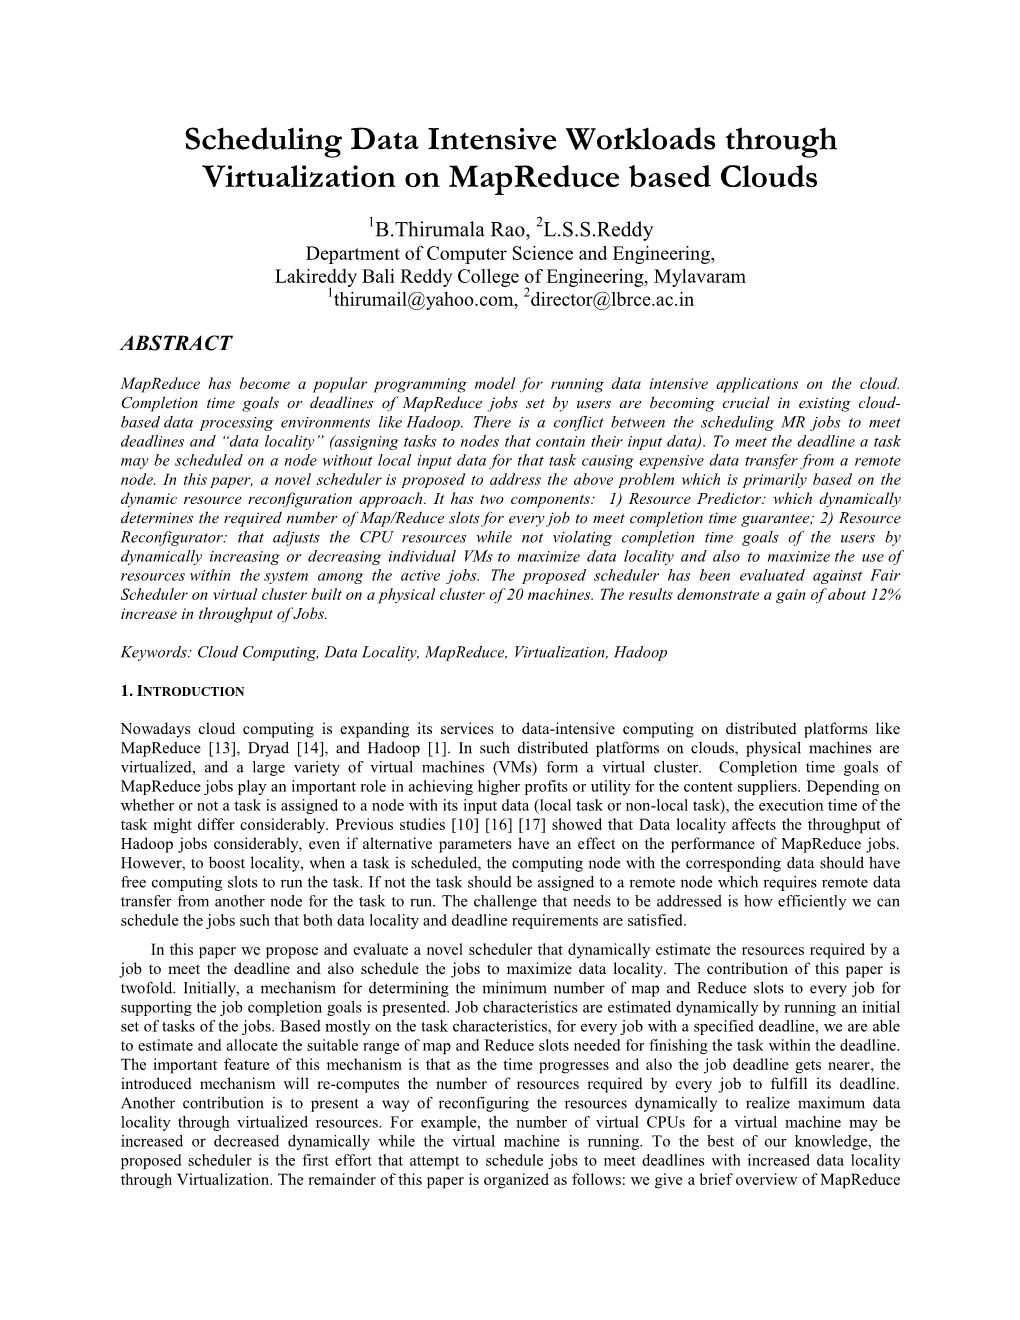 Scheduling Data Intensive Workloads Through Virtualization on Mapreduce Based Clouds